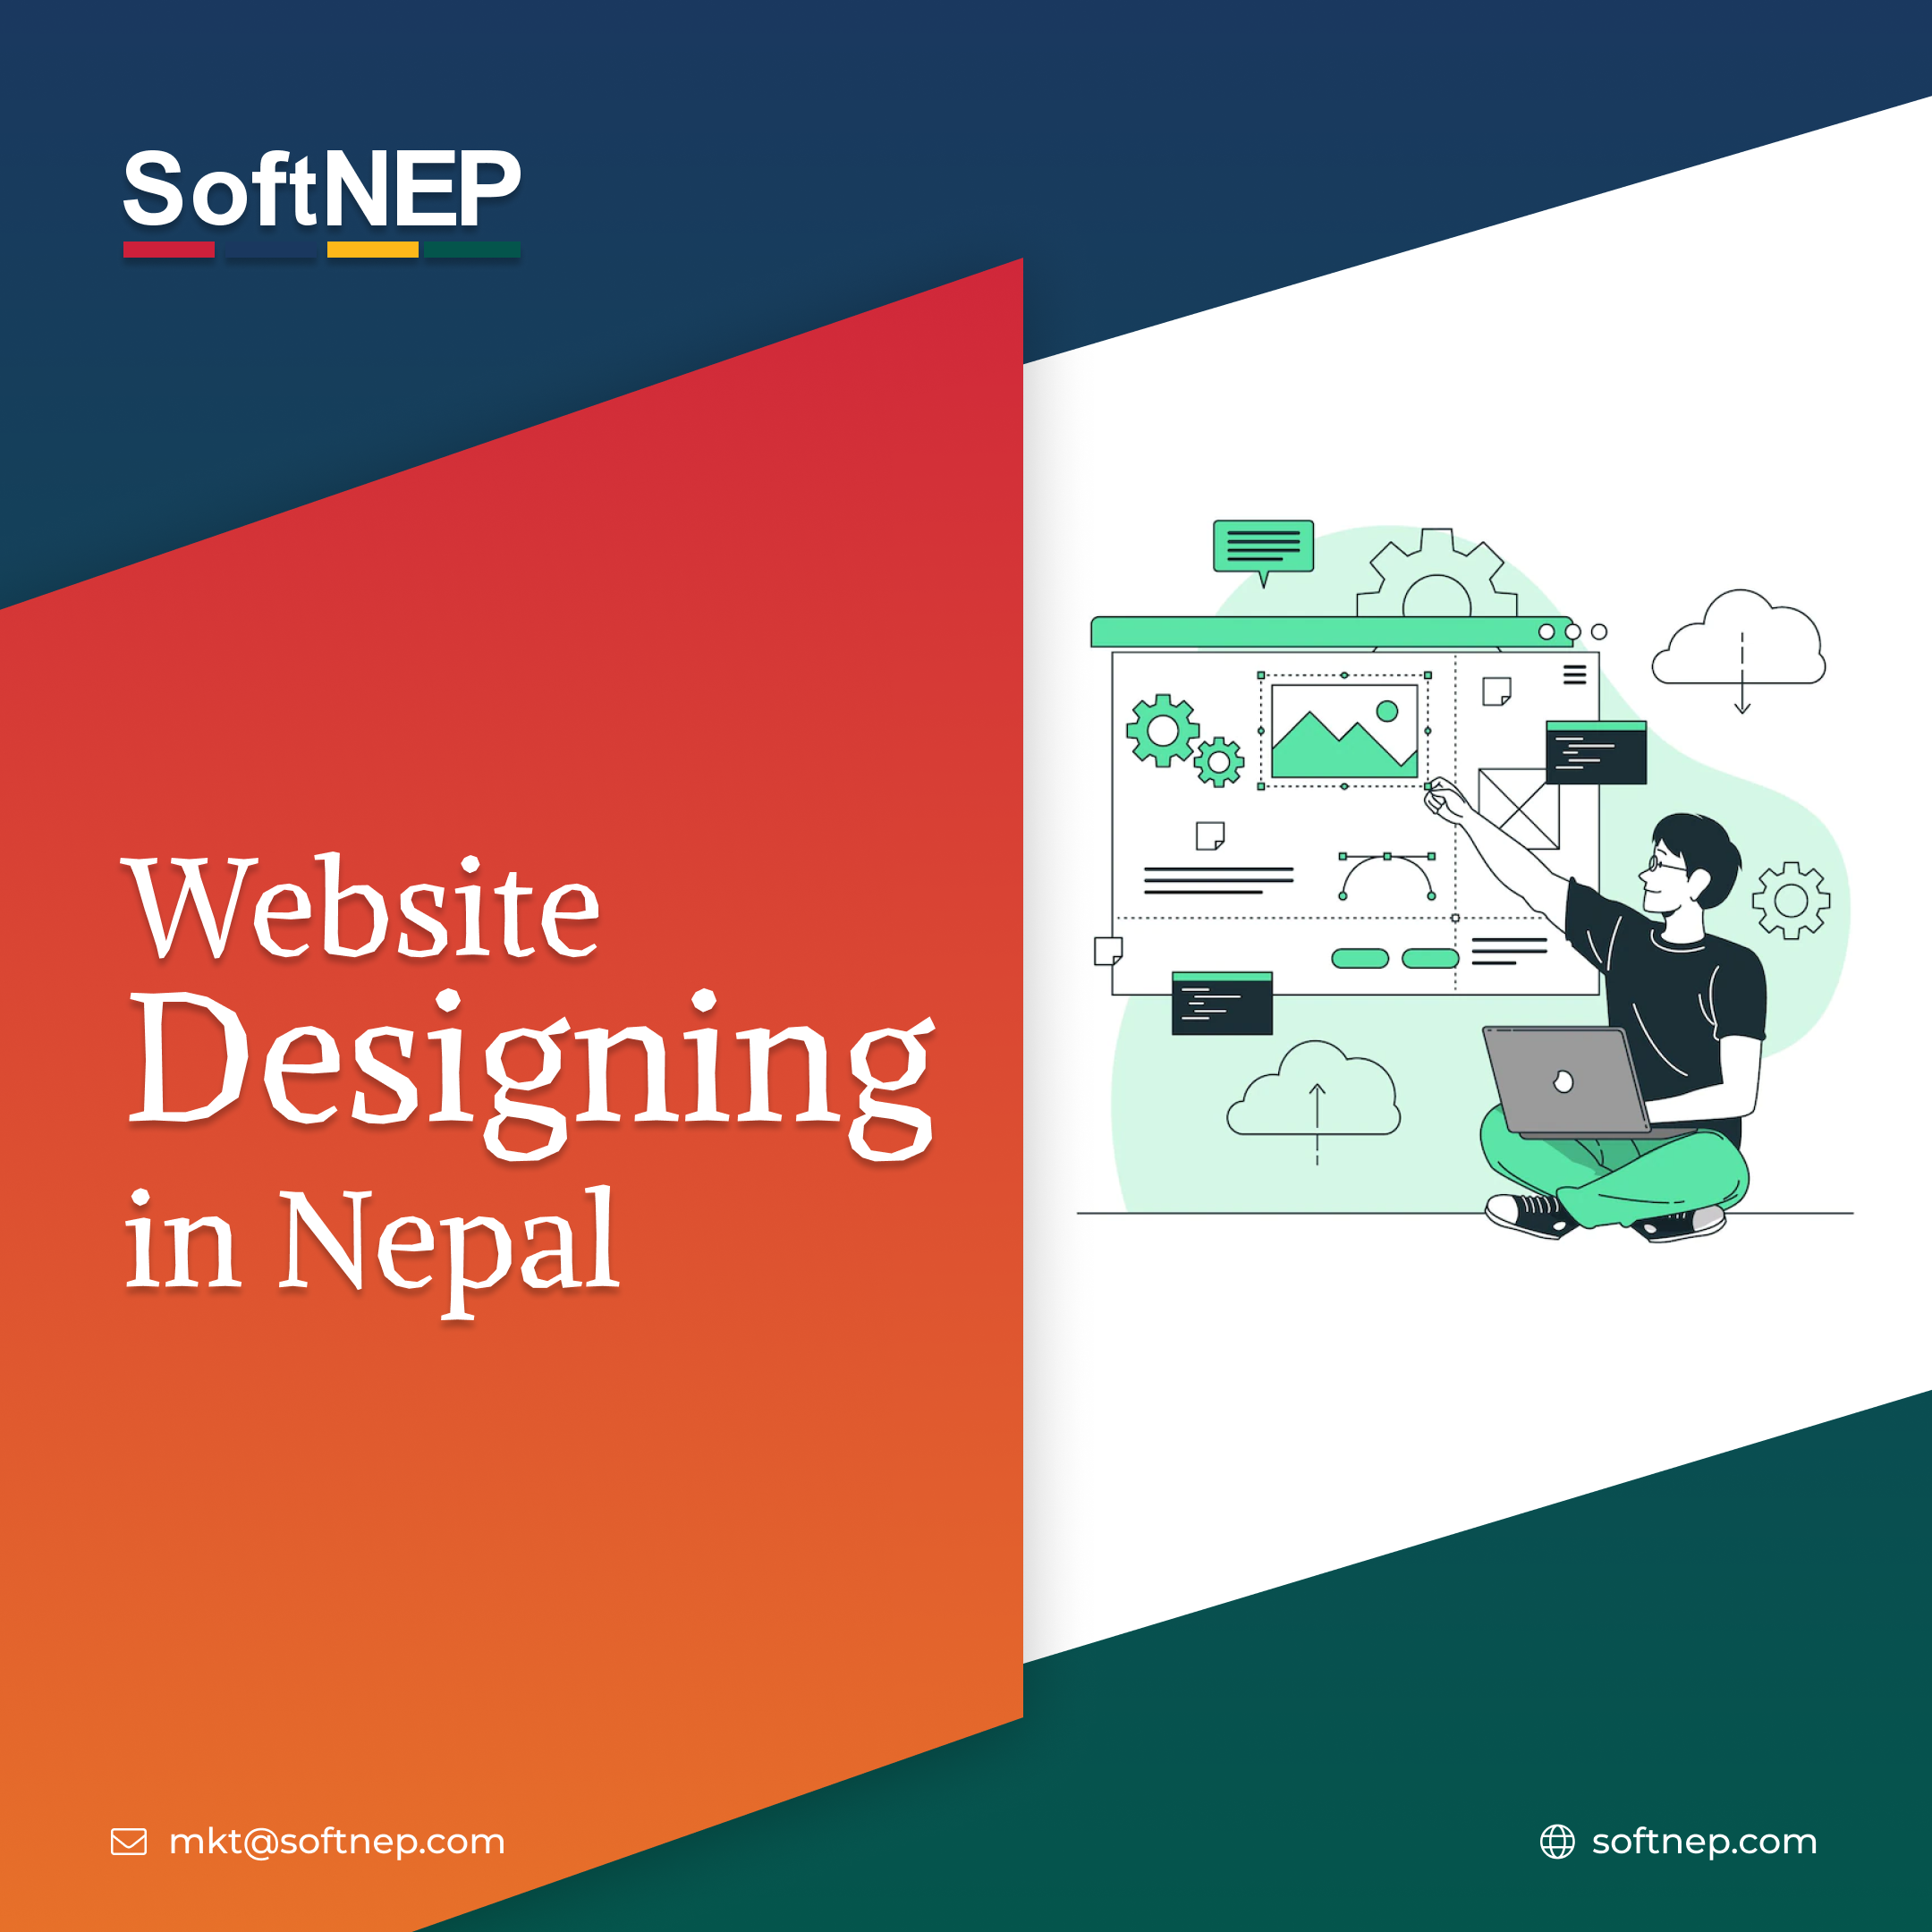 Website Designing in Nepal